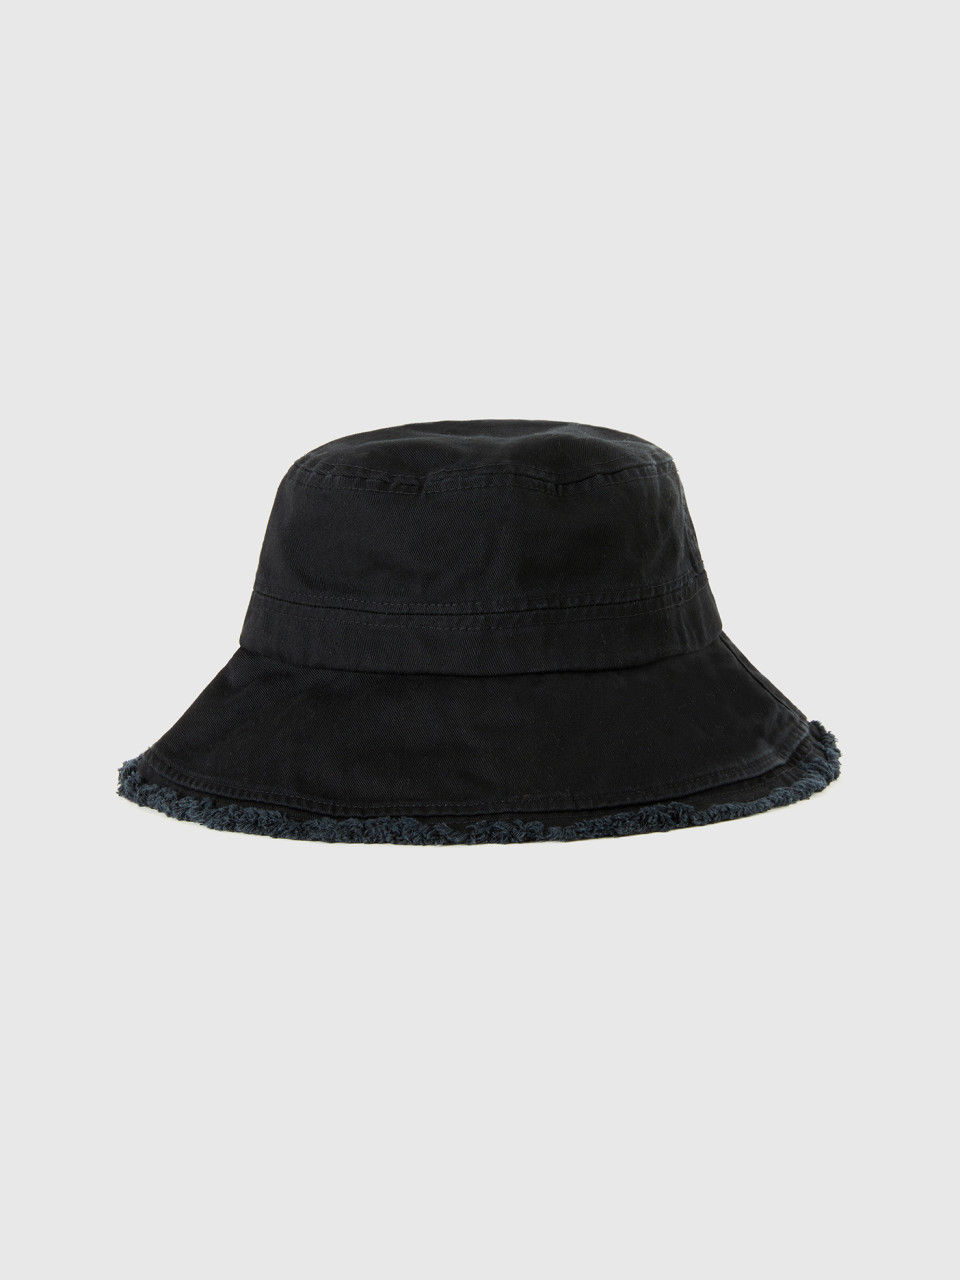 Benetton, Black Bucket-style Hat, Black, Women